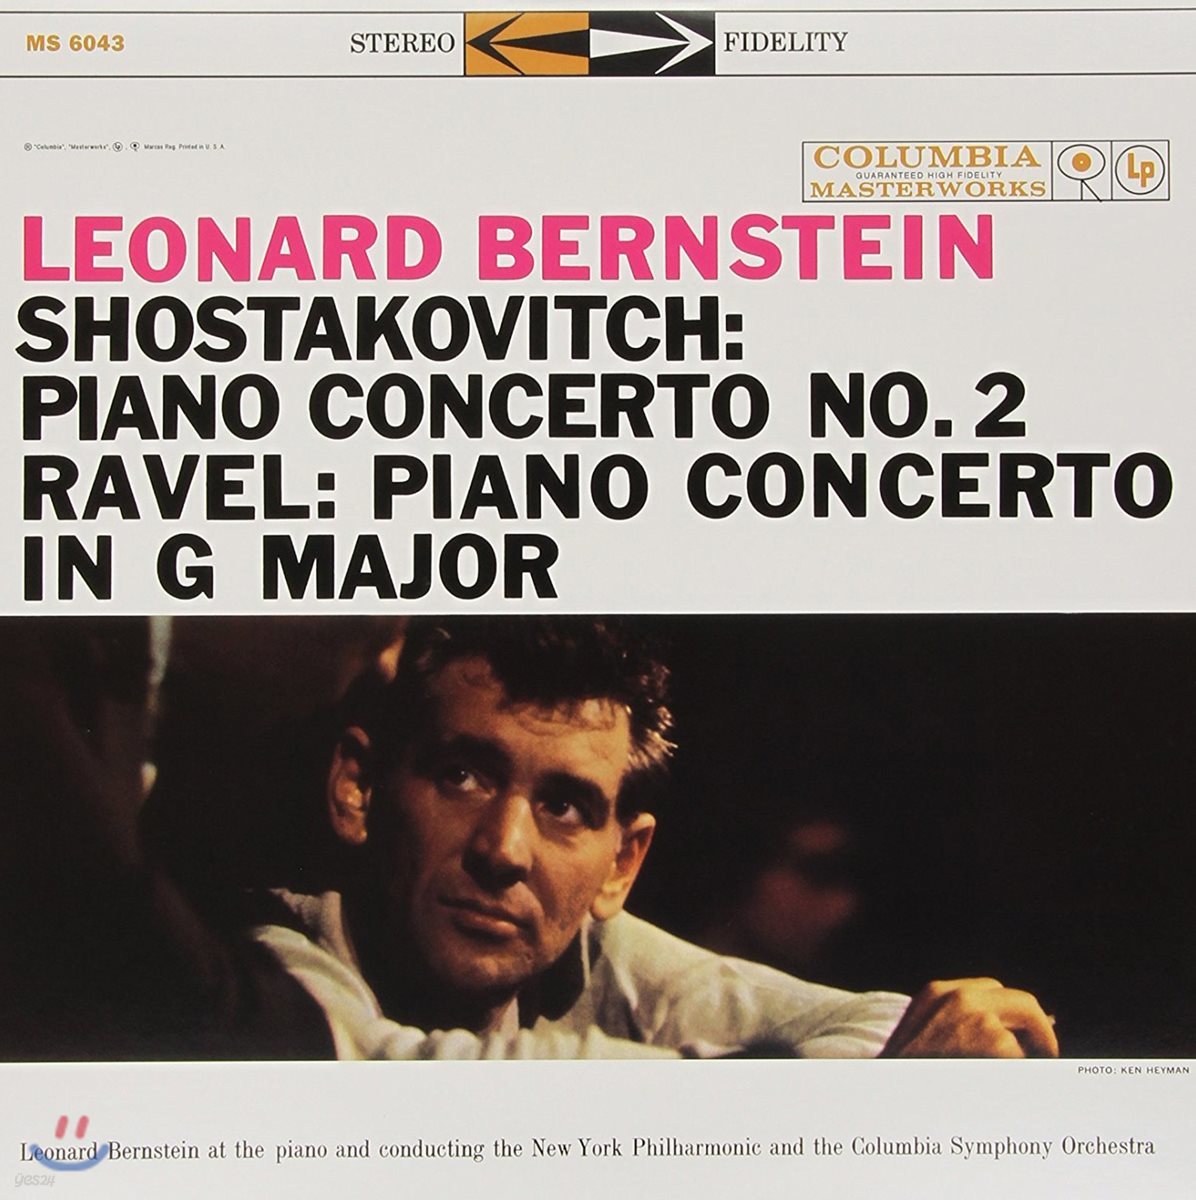 Leonard Bernstein 쇼스타코비치: 피아노 협주곡 2번 / 라벨: 피아노 협주곡 G장조 (Shostakovitch & Ravel: Piano Concertos) [LP]